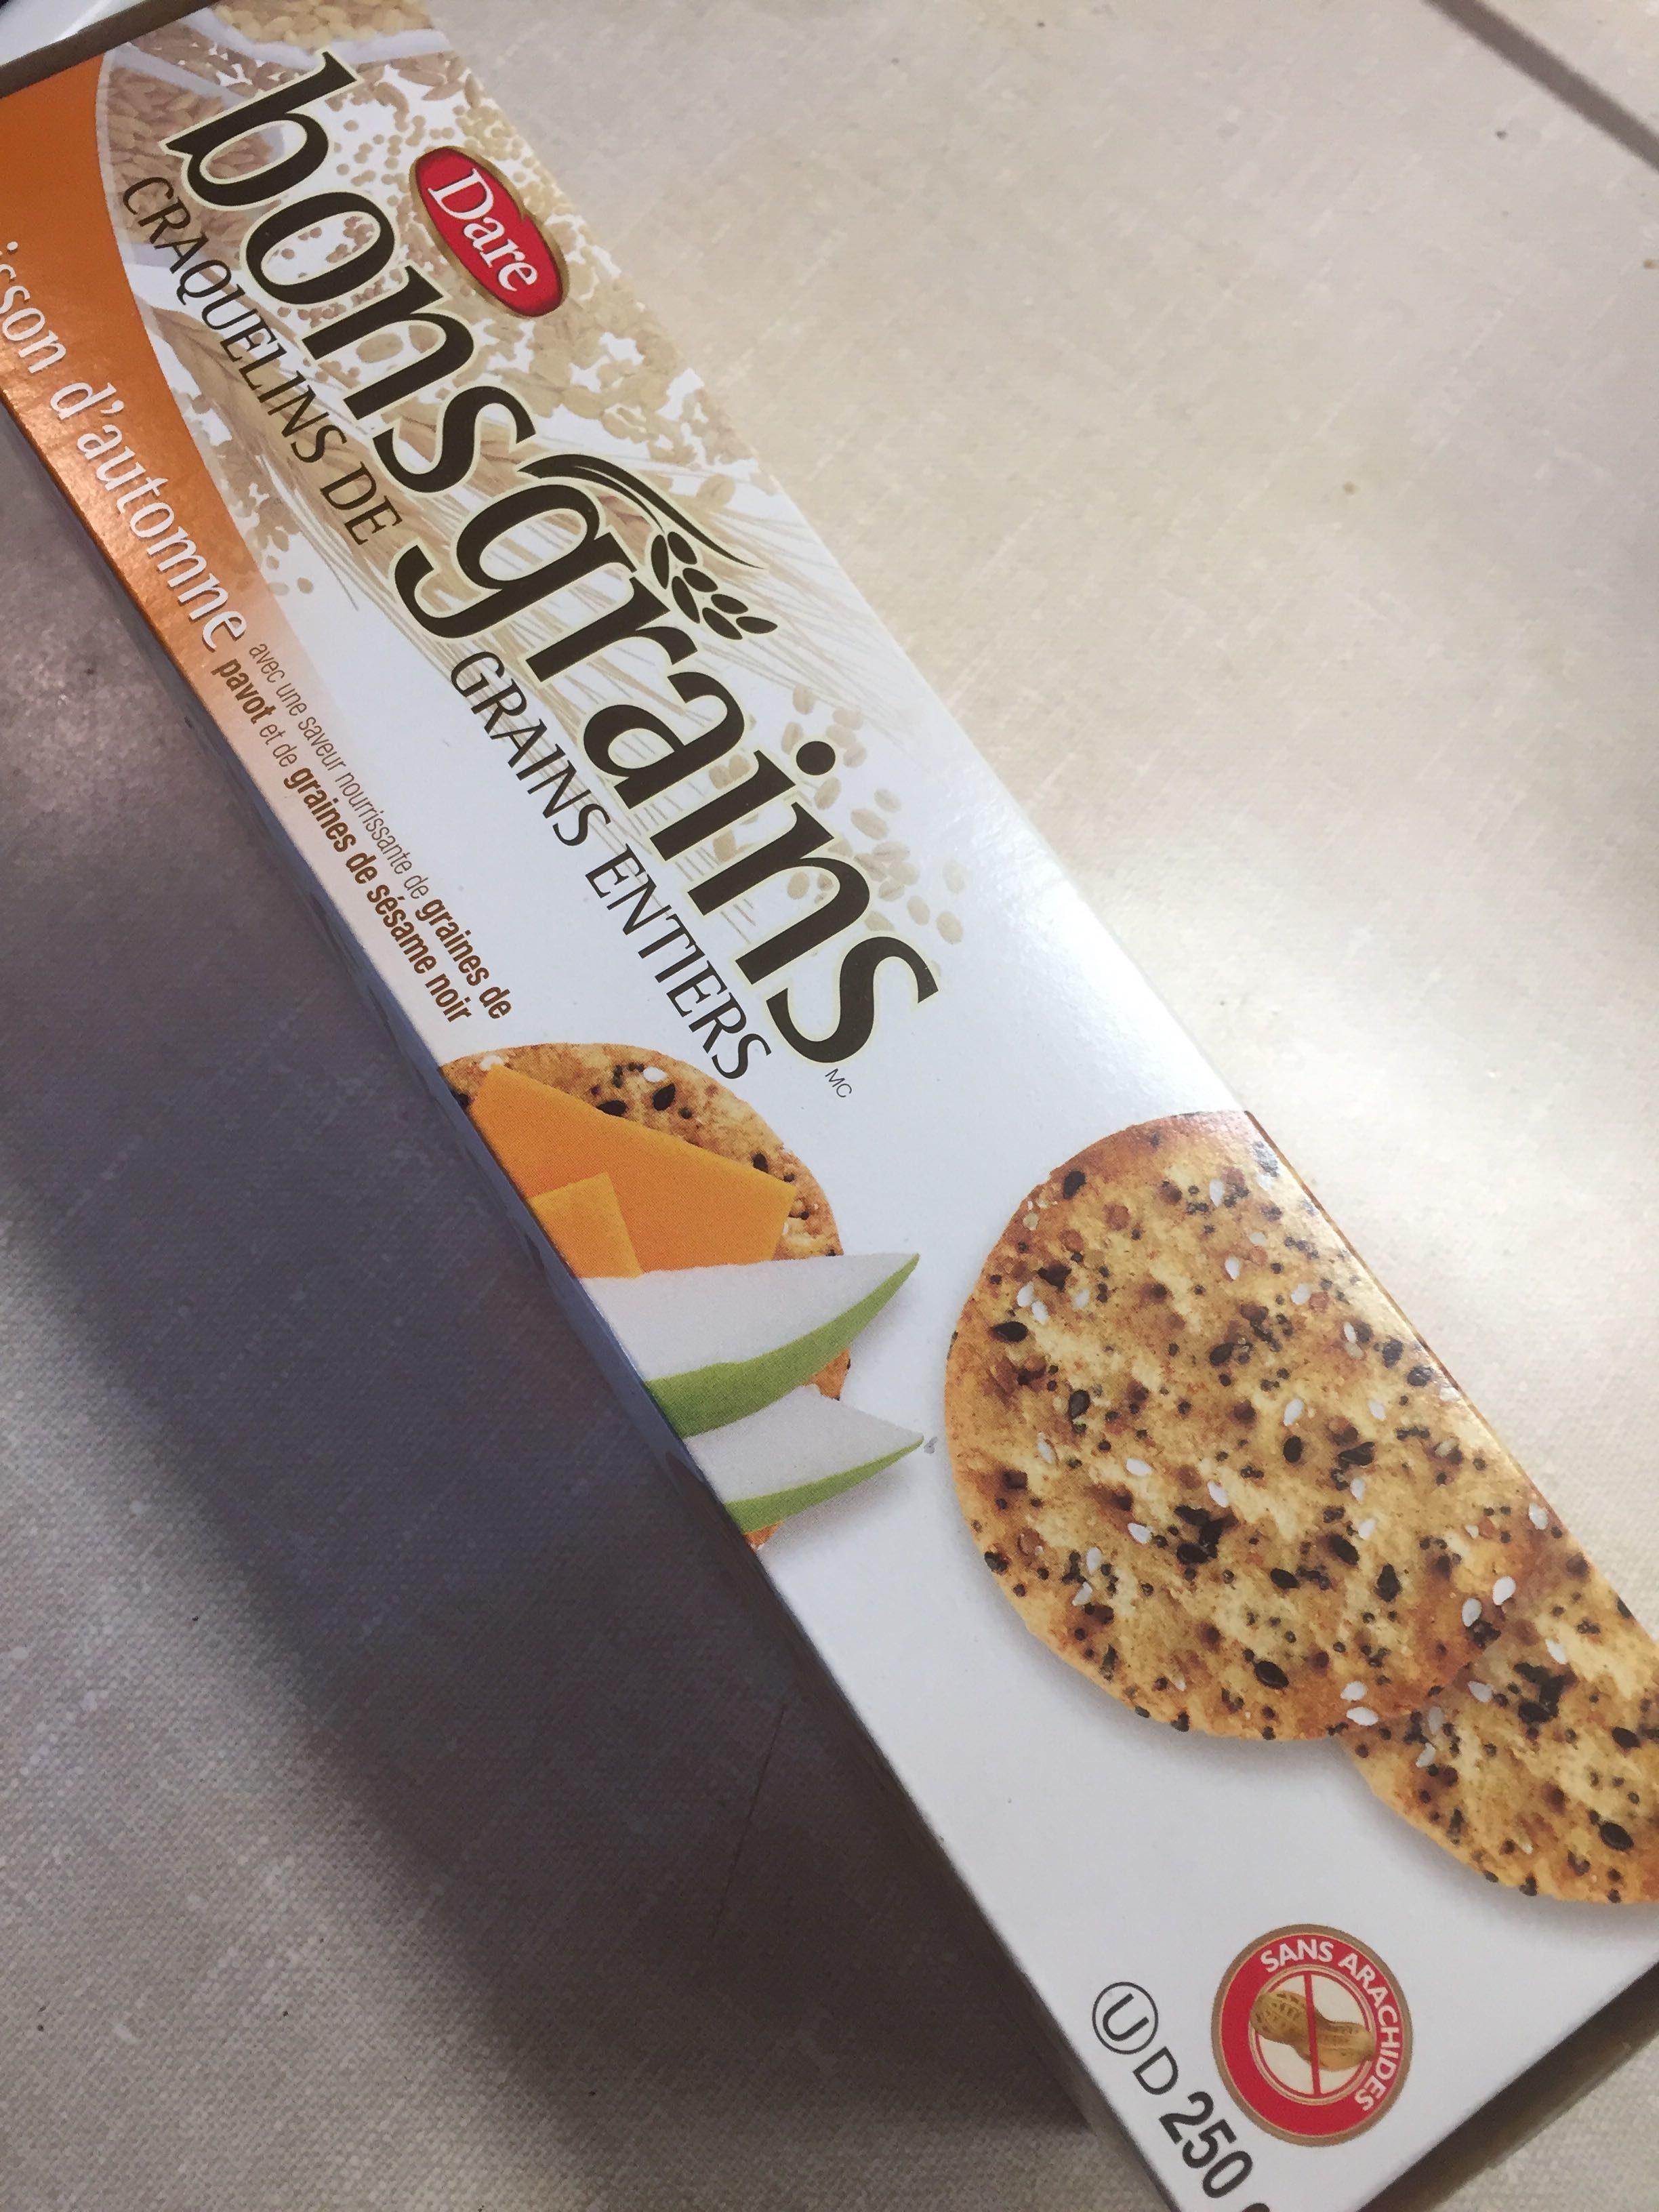 Grainsfirst crackers - Product - en